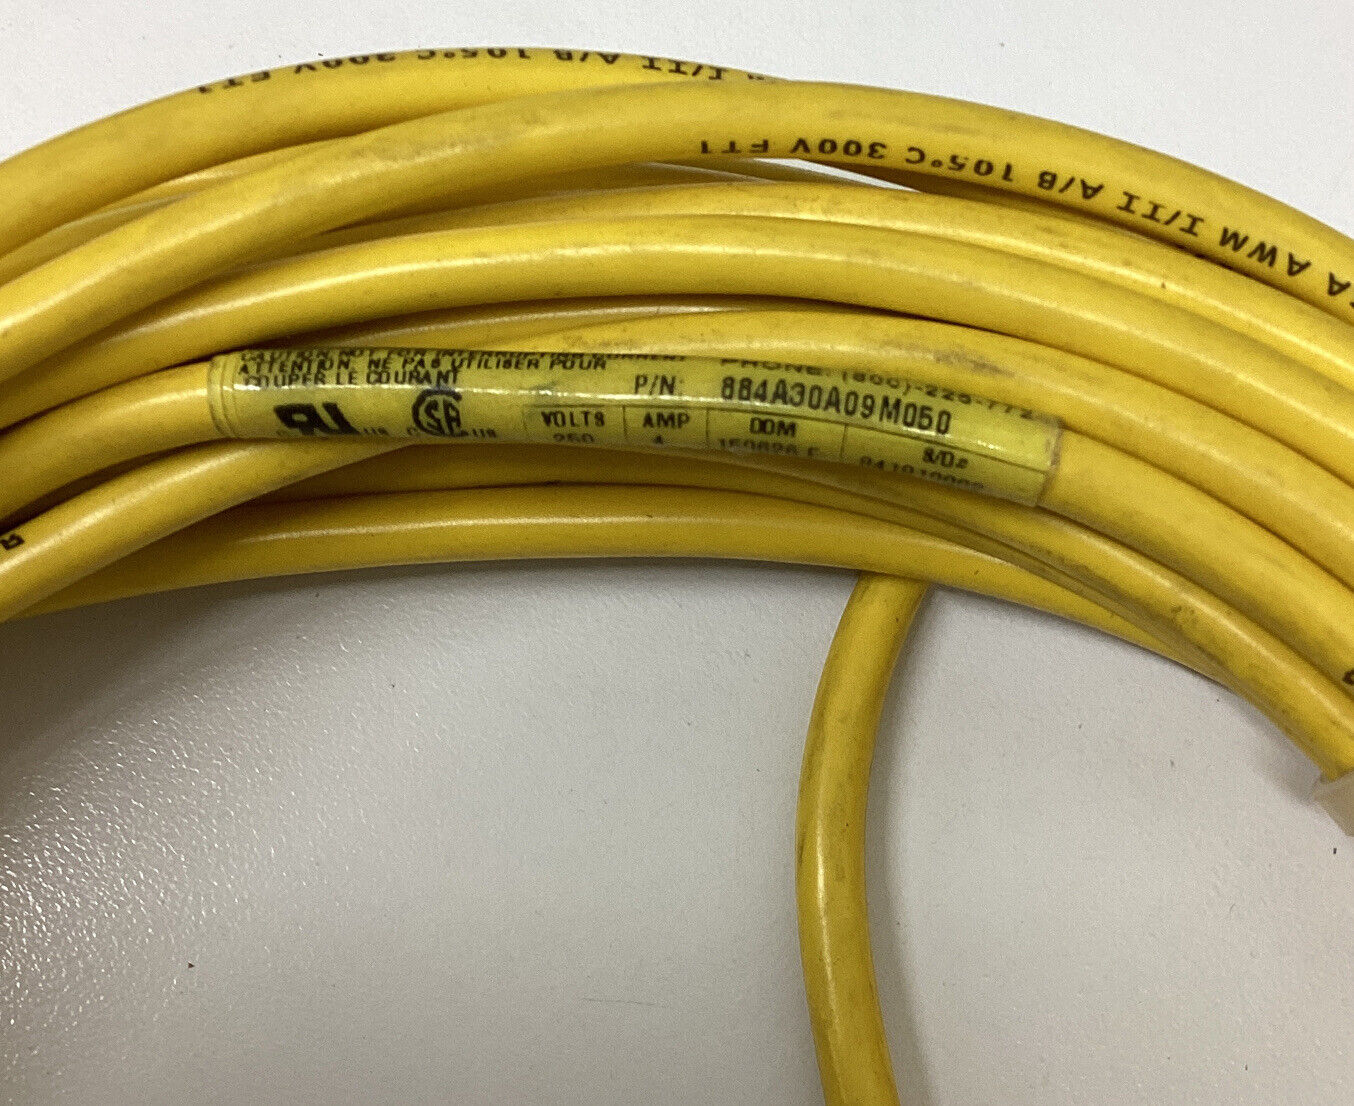 Brad WoodHead 1200680181/884A30A09M050 AP In-line Split Cable (CBL107)